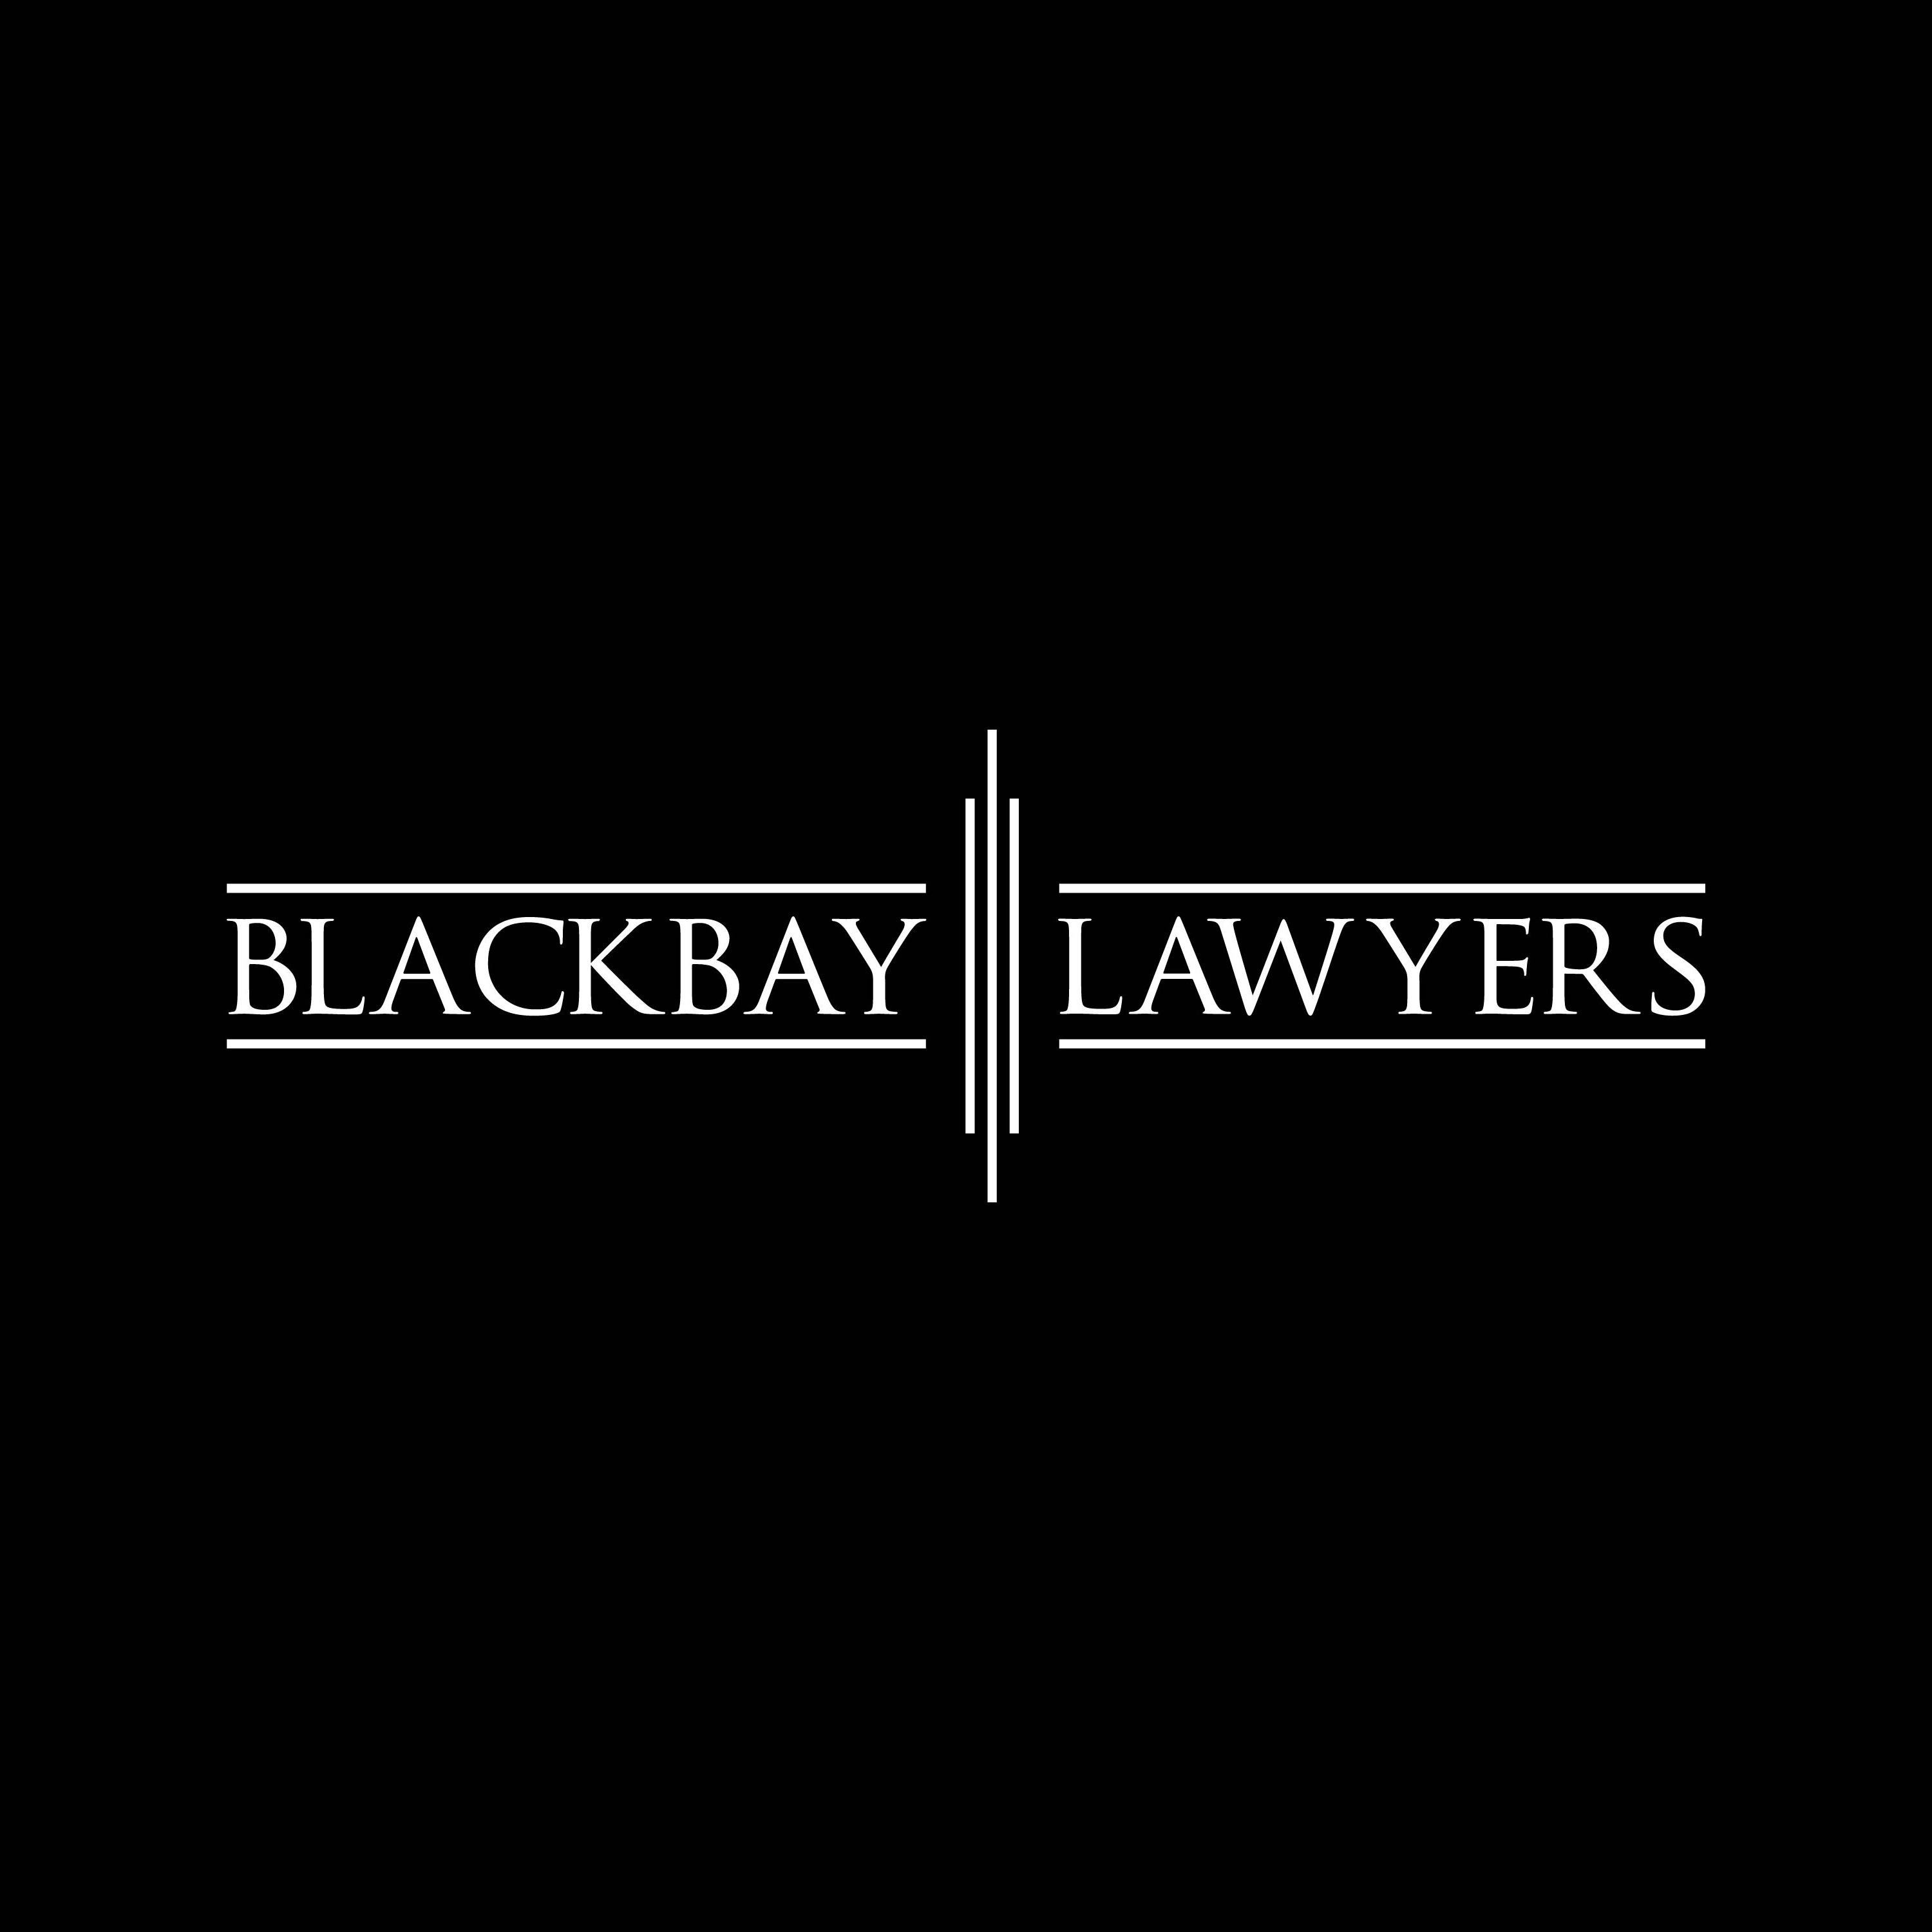 BlackBay Lawyers - Sydney, NSW 2000 - (02) 8005 3077 | ShowMeLocal.com